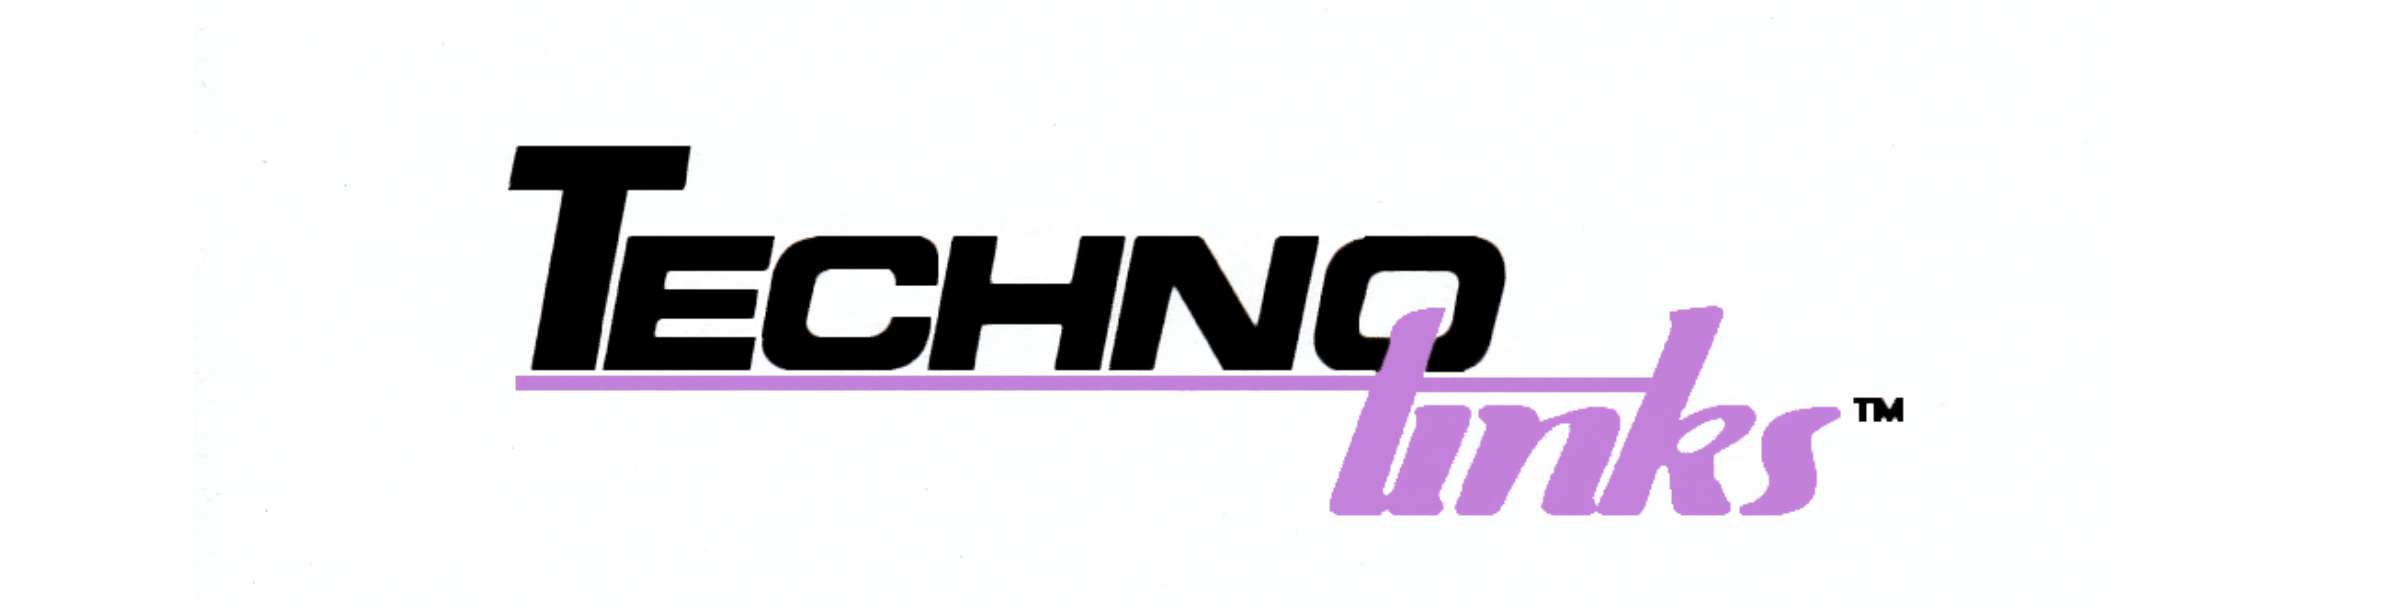 Technolinks logo